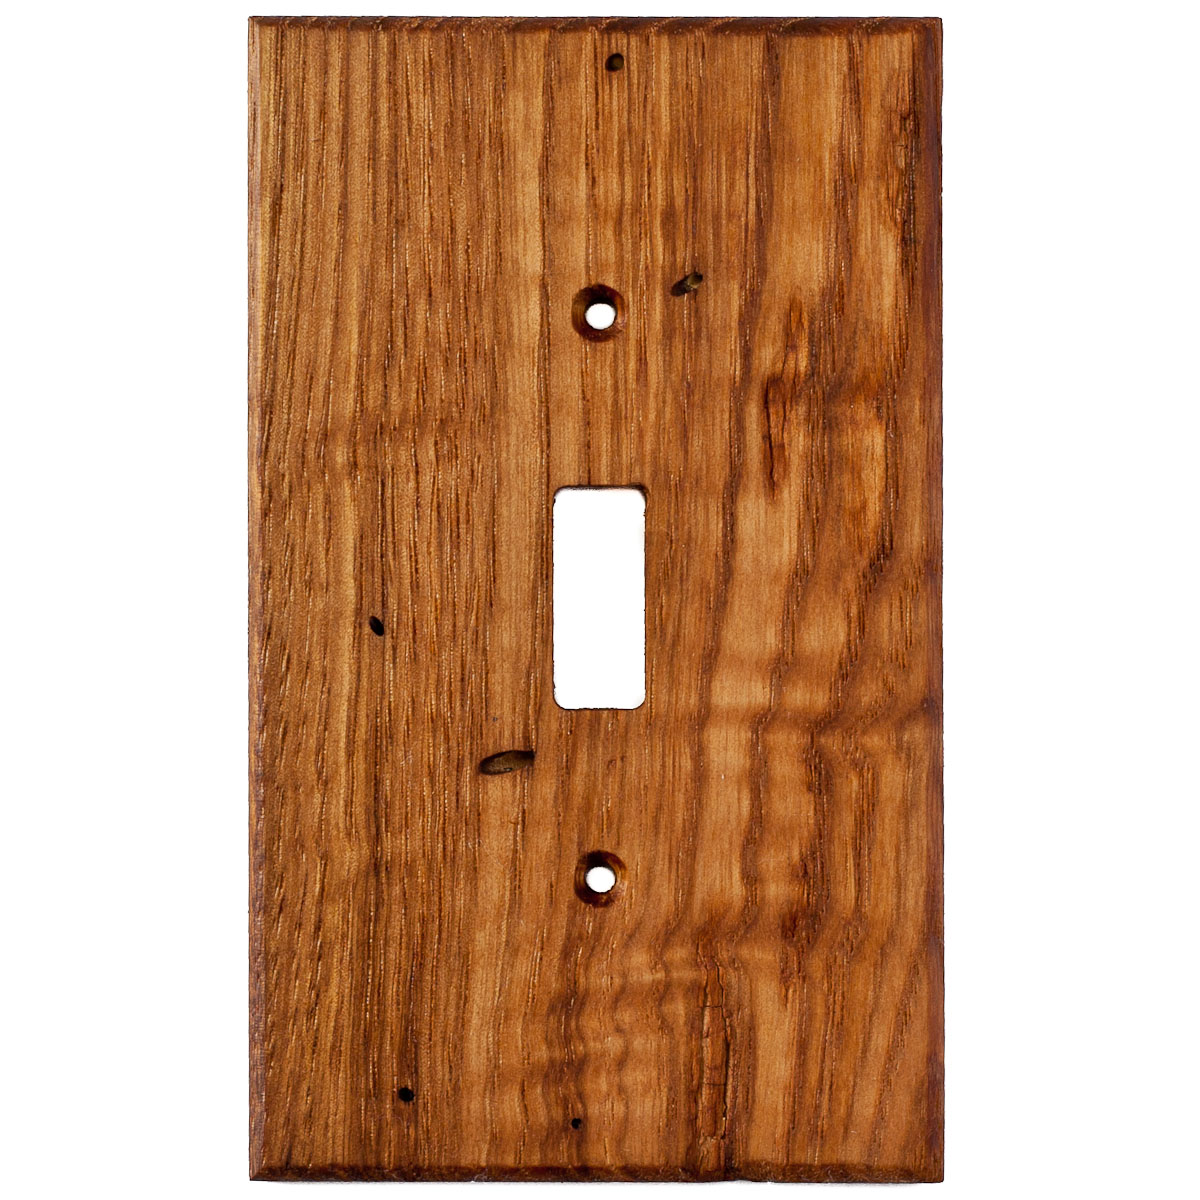 https://www.virgintimberlumber.com/wp-content/uploads/2022/06/reclaimed-wormy-chestnut-wood-wall-plate-1gang-light-switch-cover.jpg